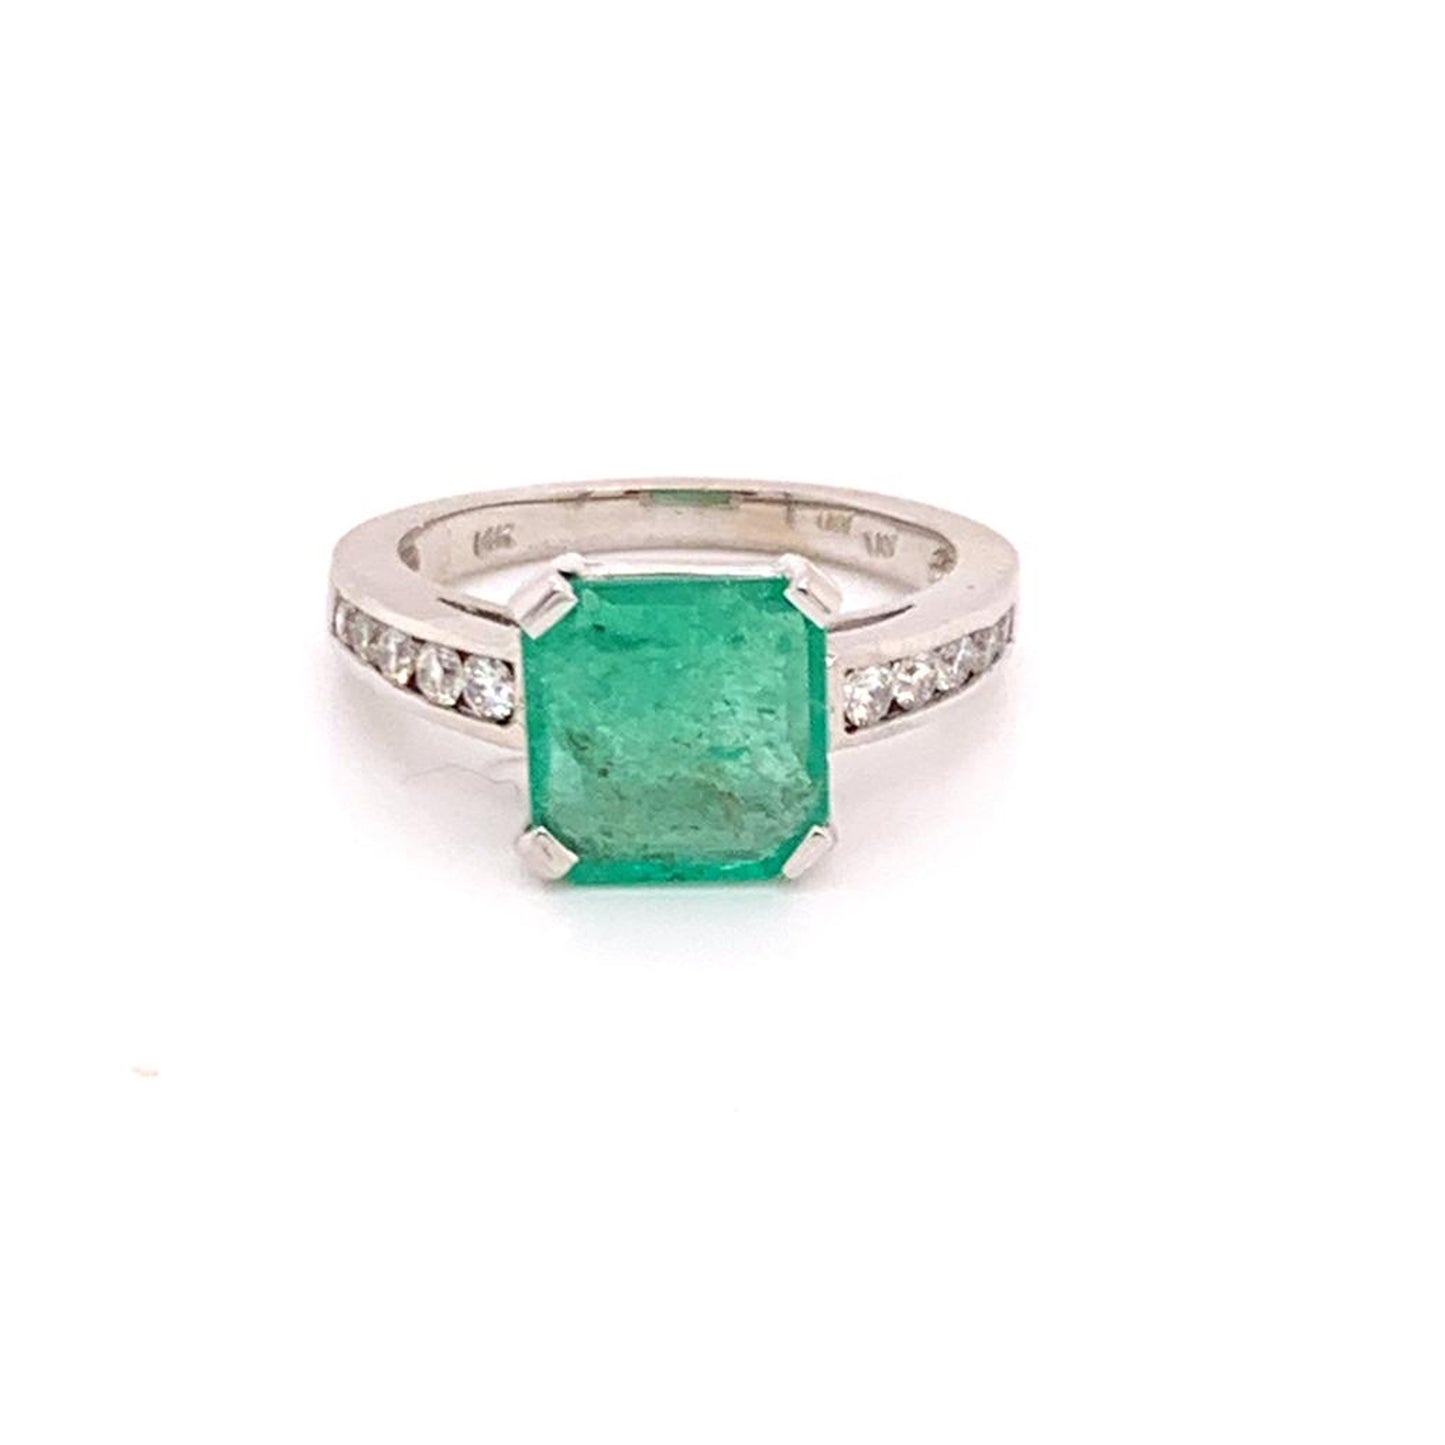 Diamond Emerald Ring 14k Gold 2.55 TCW Women Certified $3,800 912292 - Certified Estate Jewelry